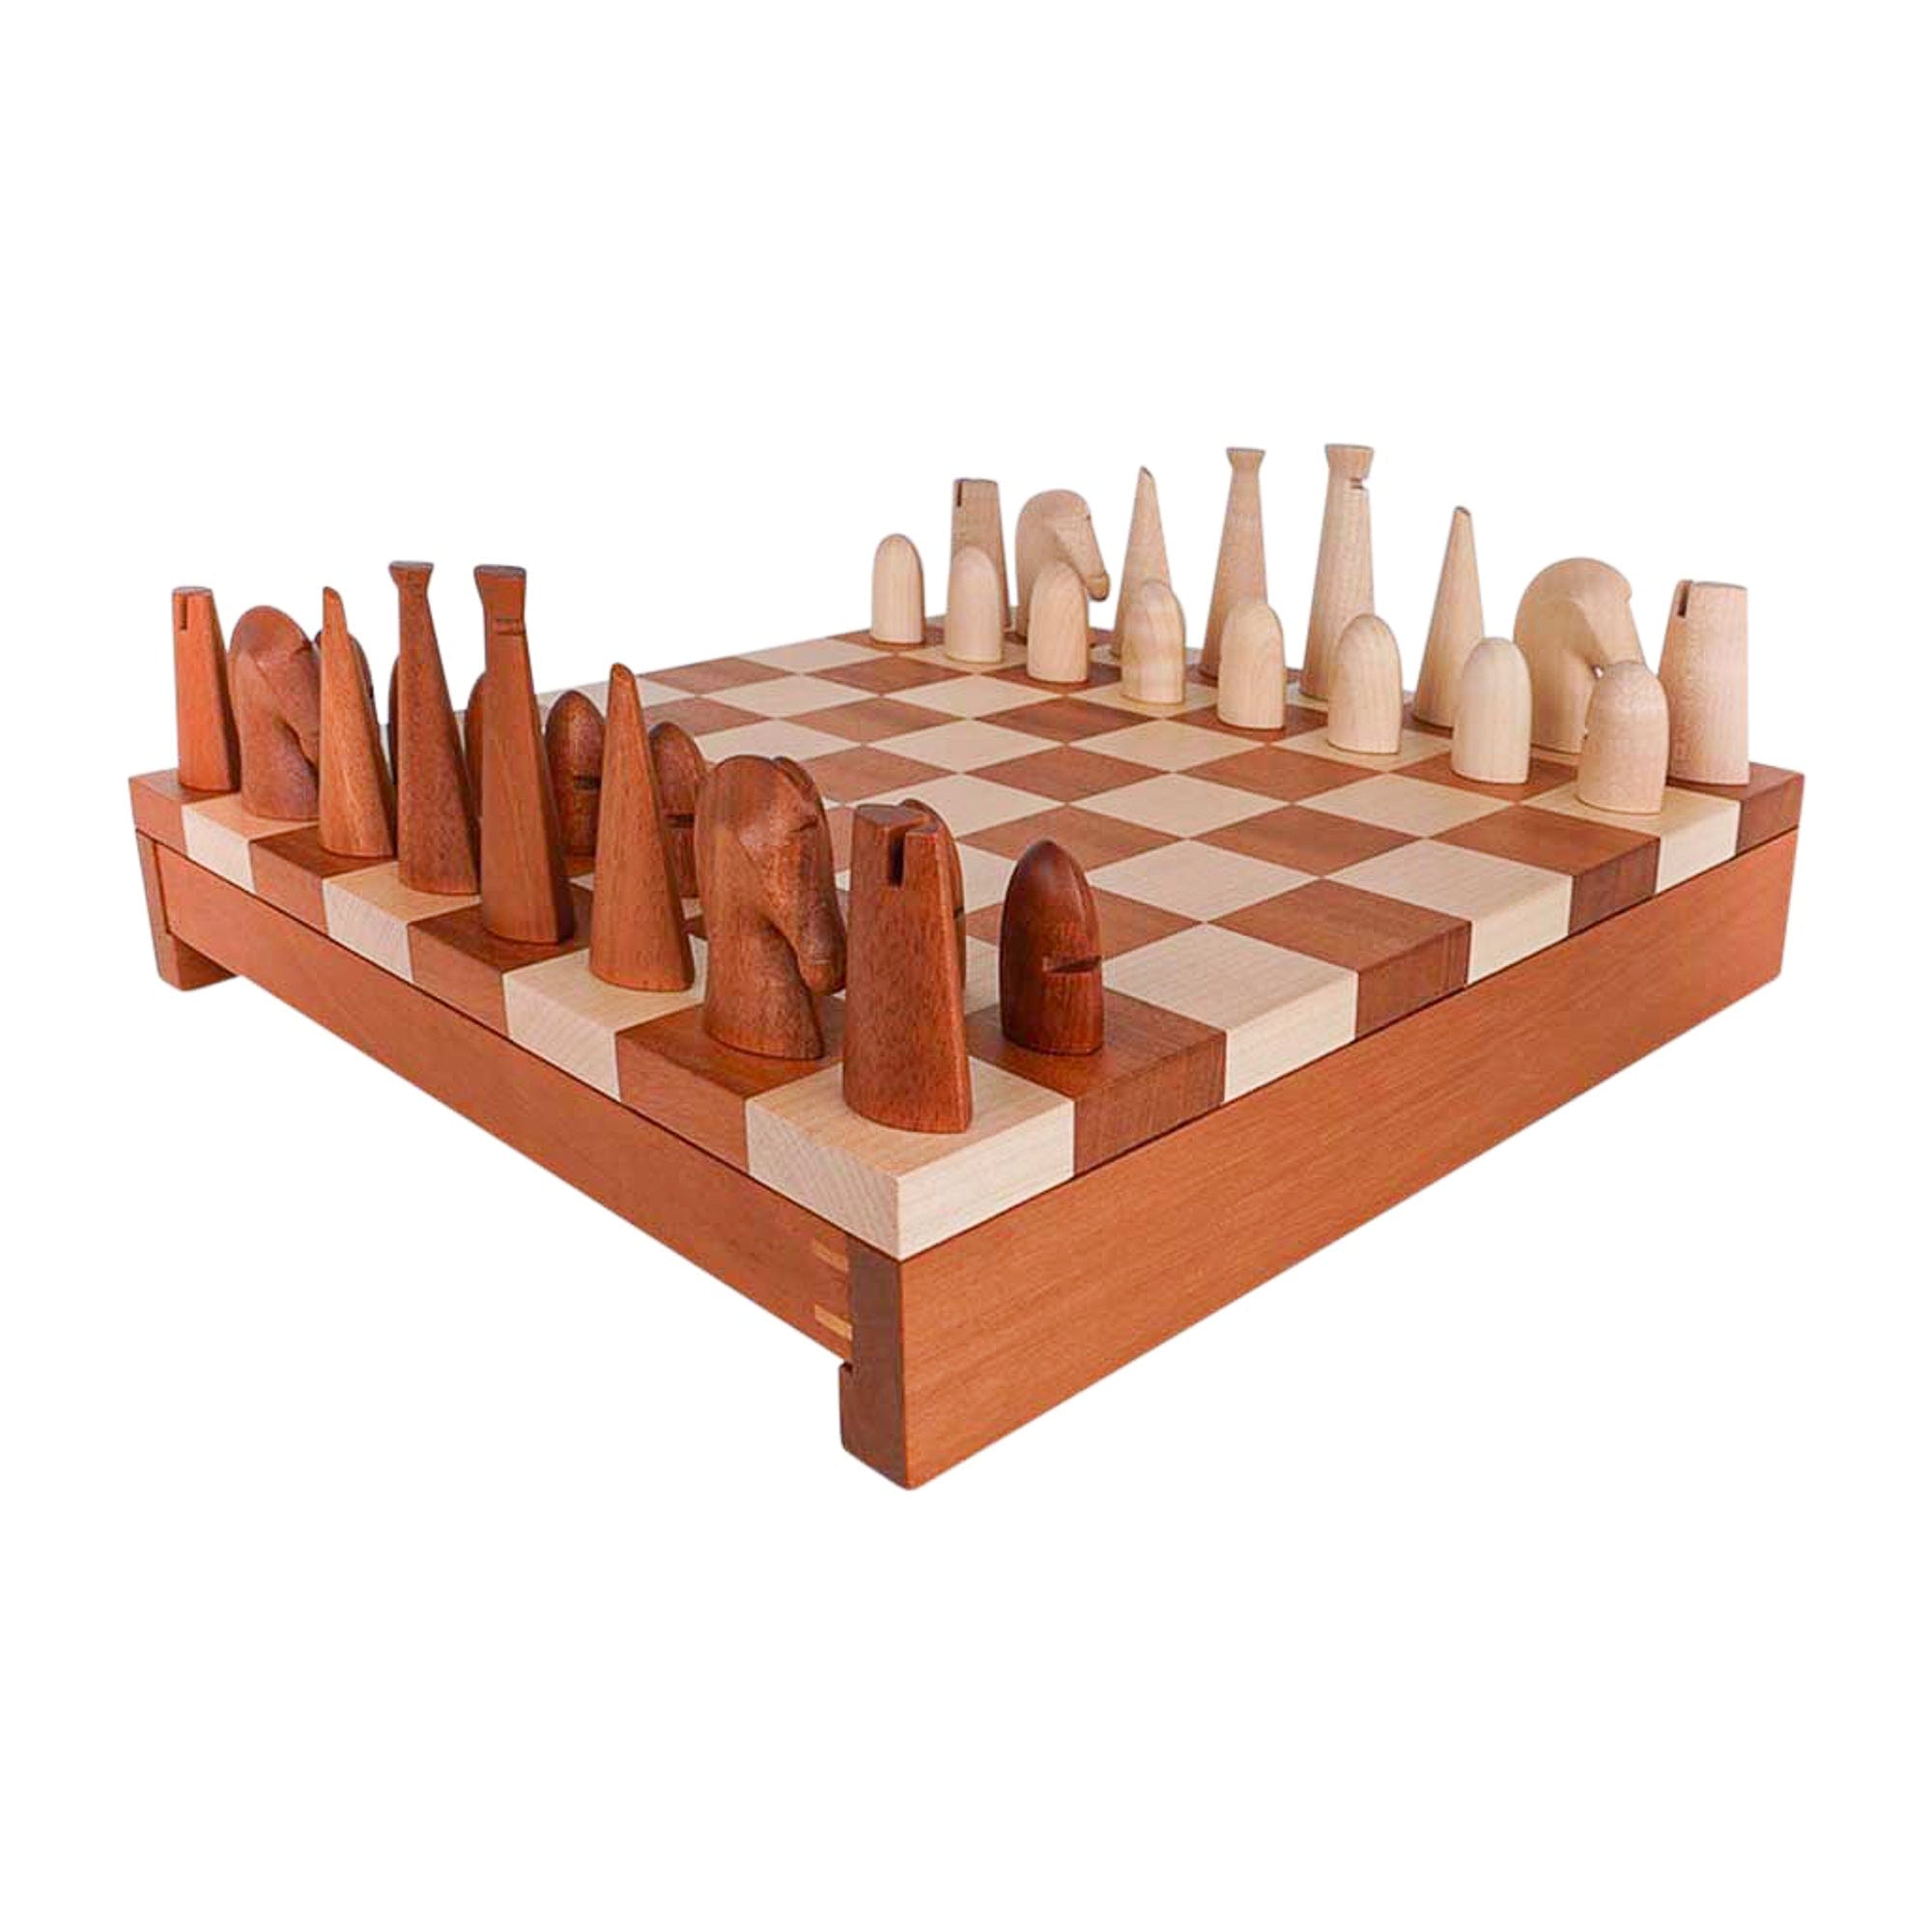 Hermes Samarcande Chess Set Sycamore Mahogany Lambskin Drawers New